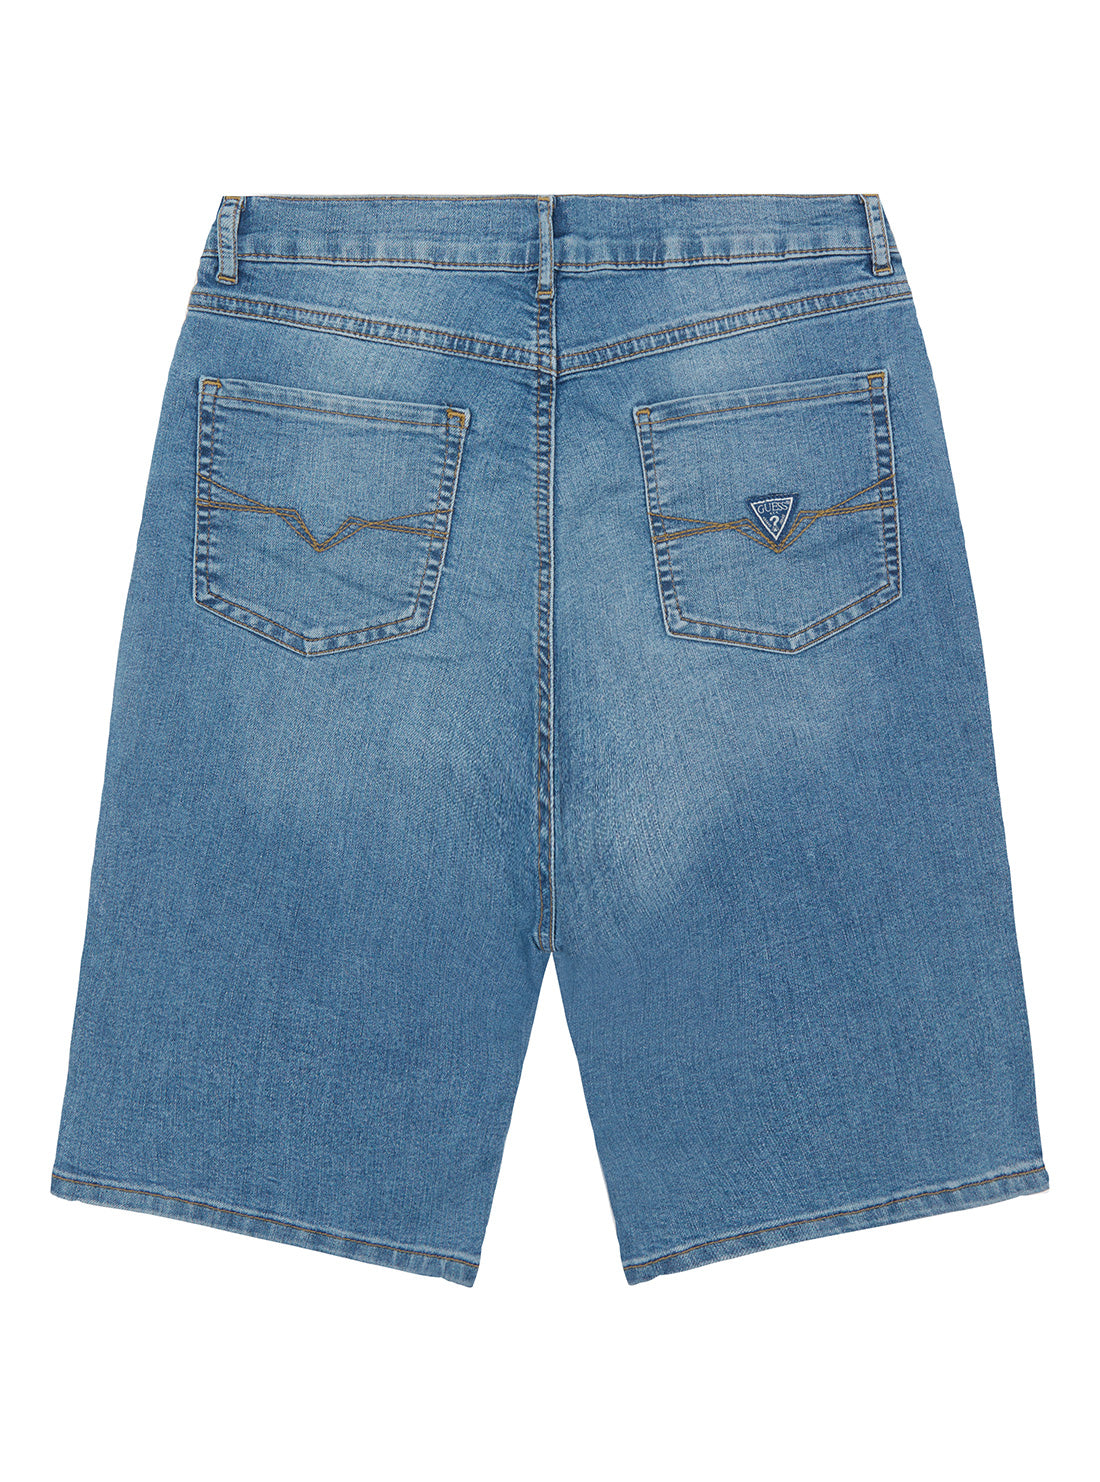 Super Bright Blue Wash Denim Shorts (7-16)